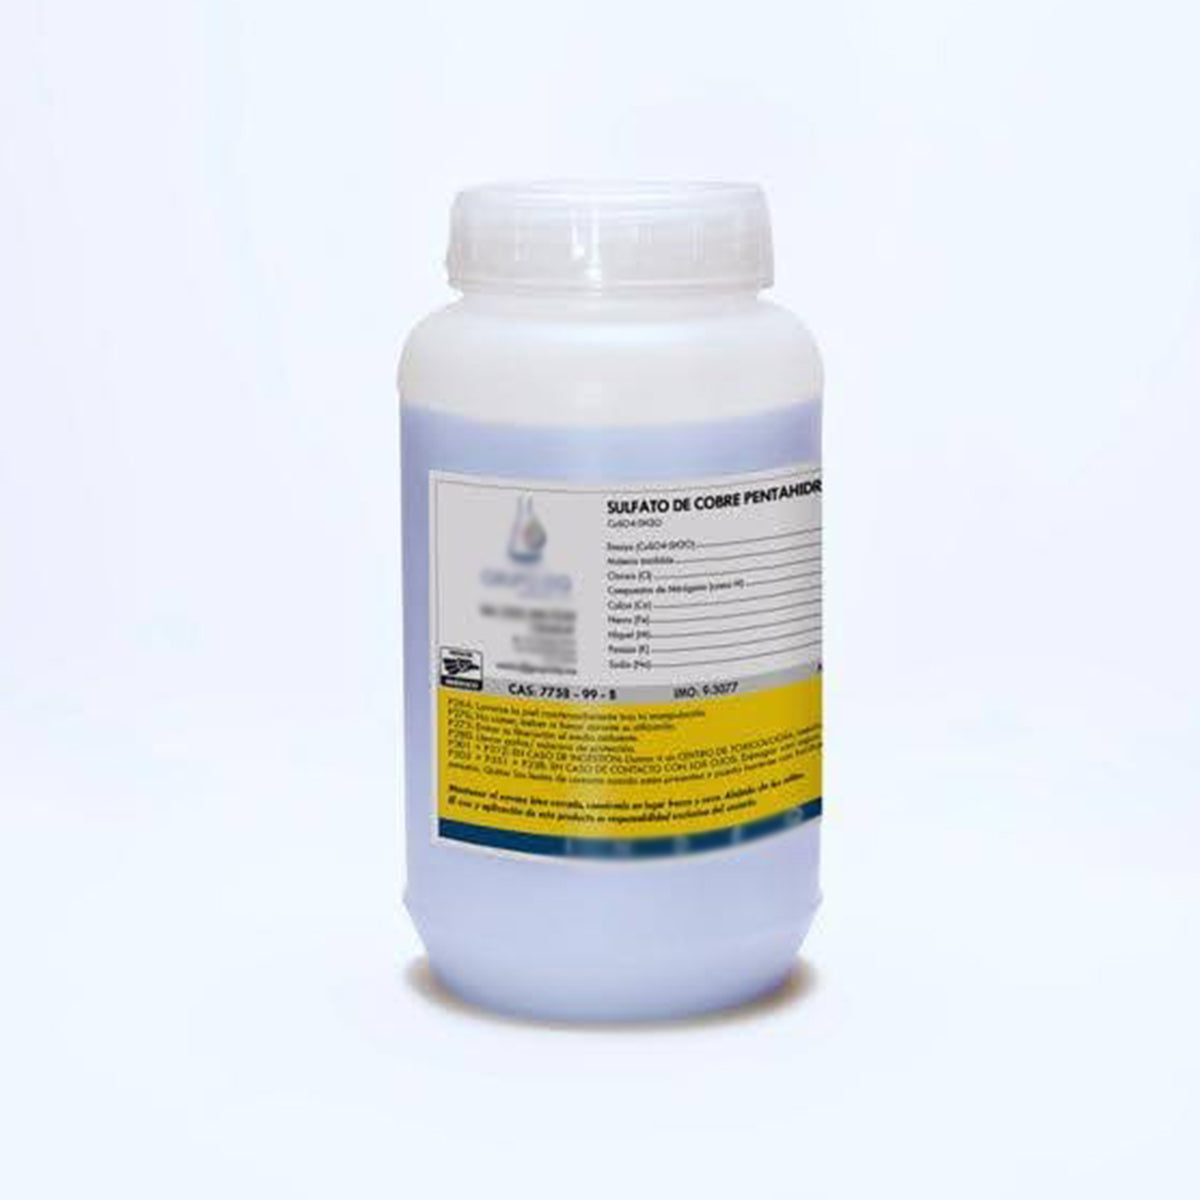 Sulfato de Cobre Comercial - 1 Kg